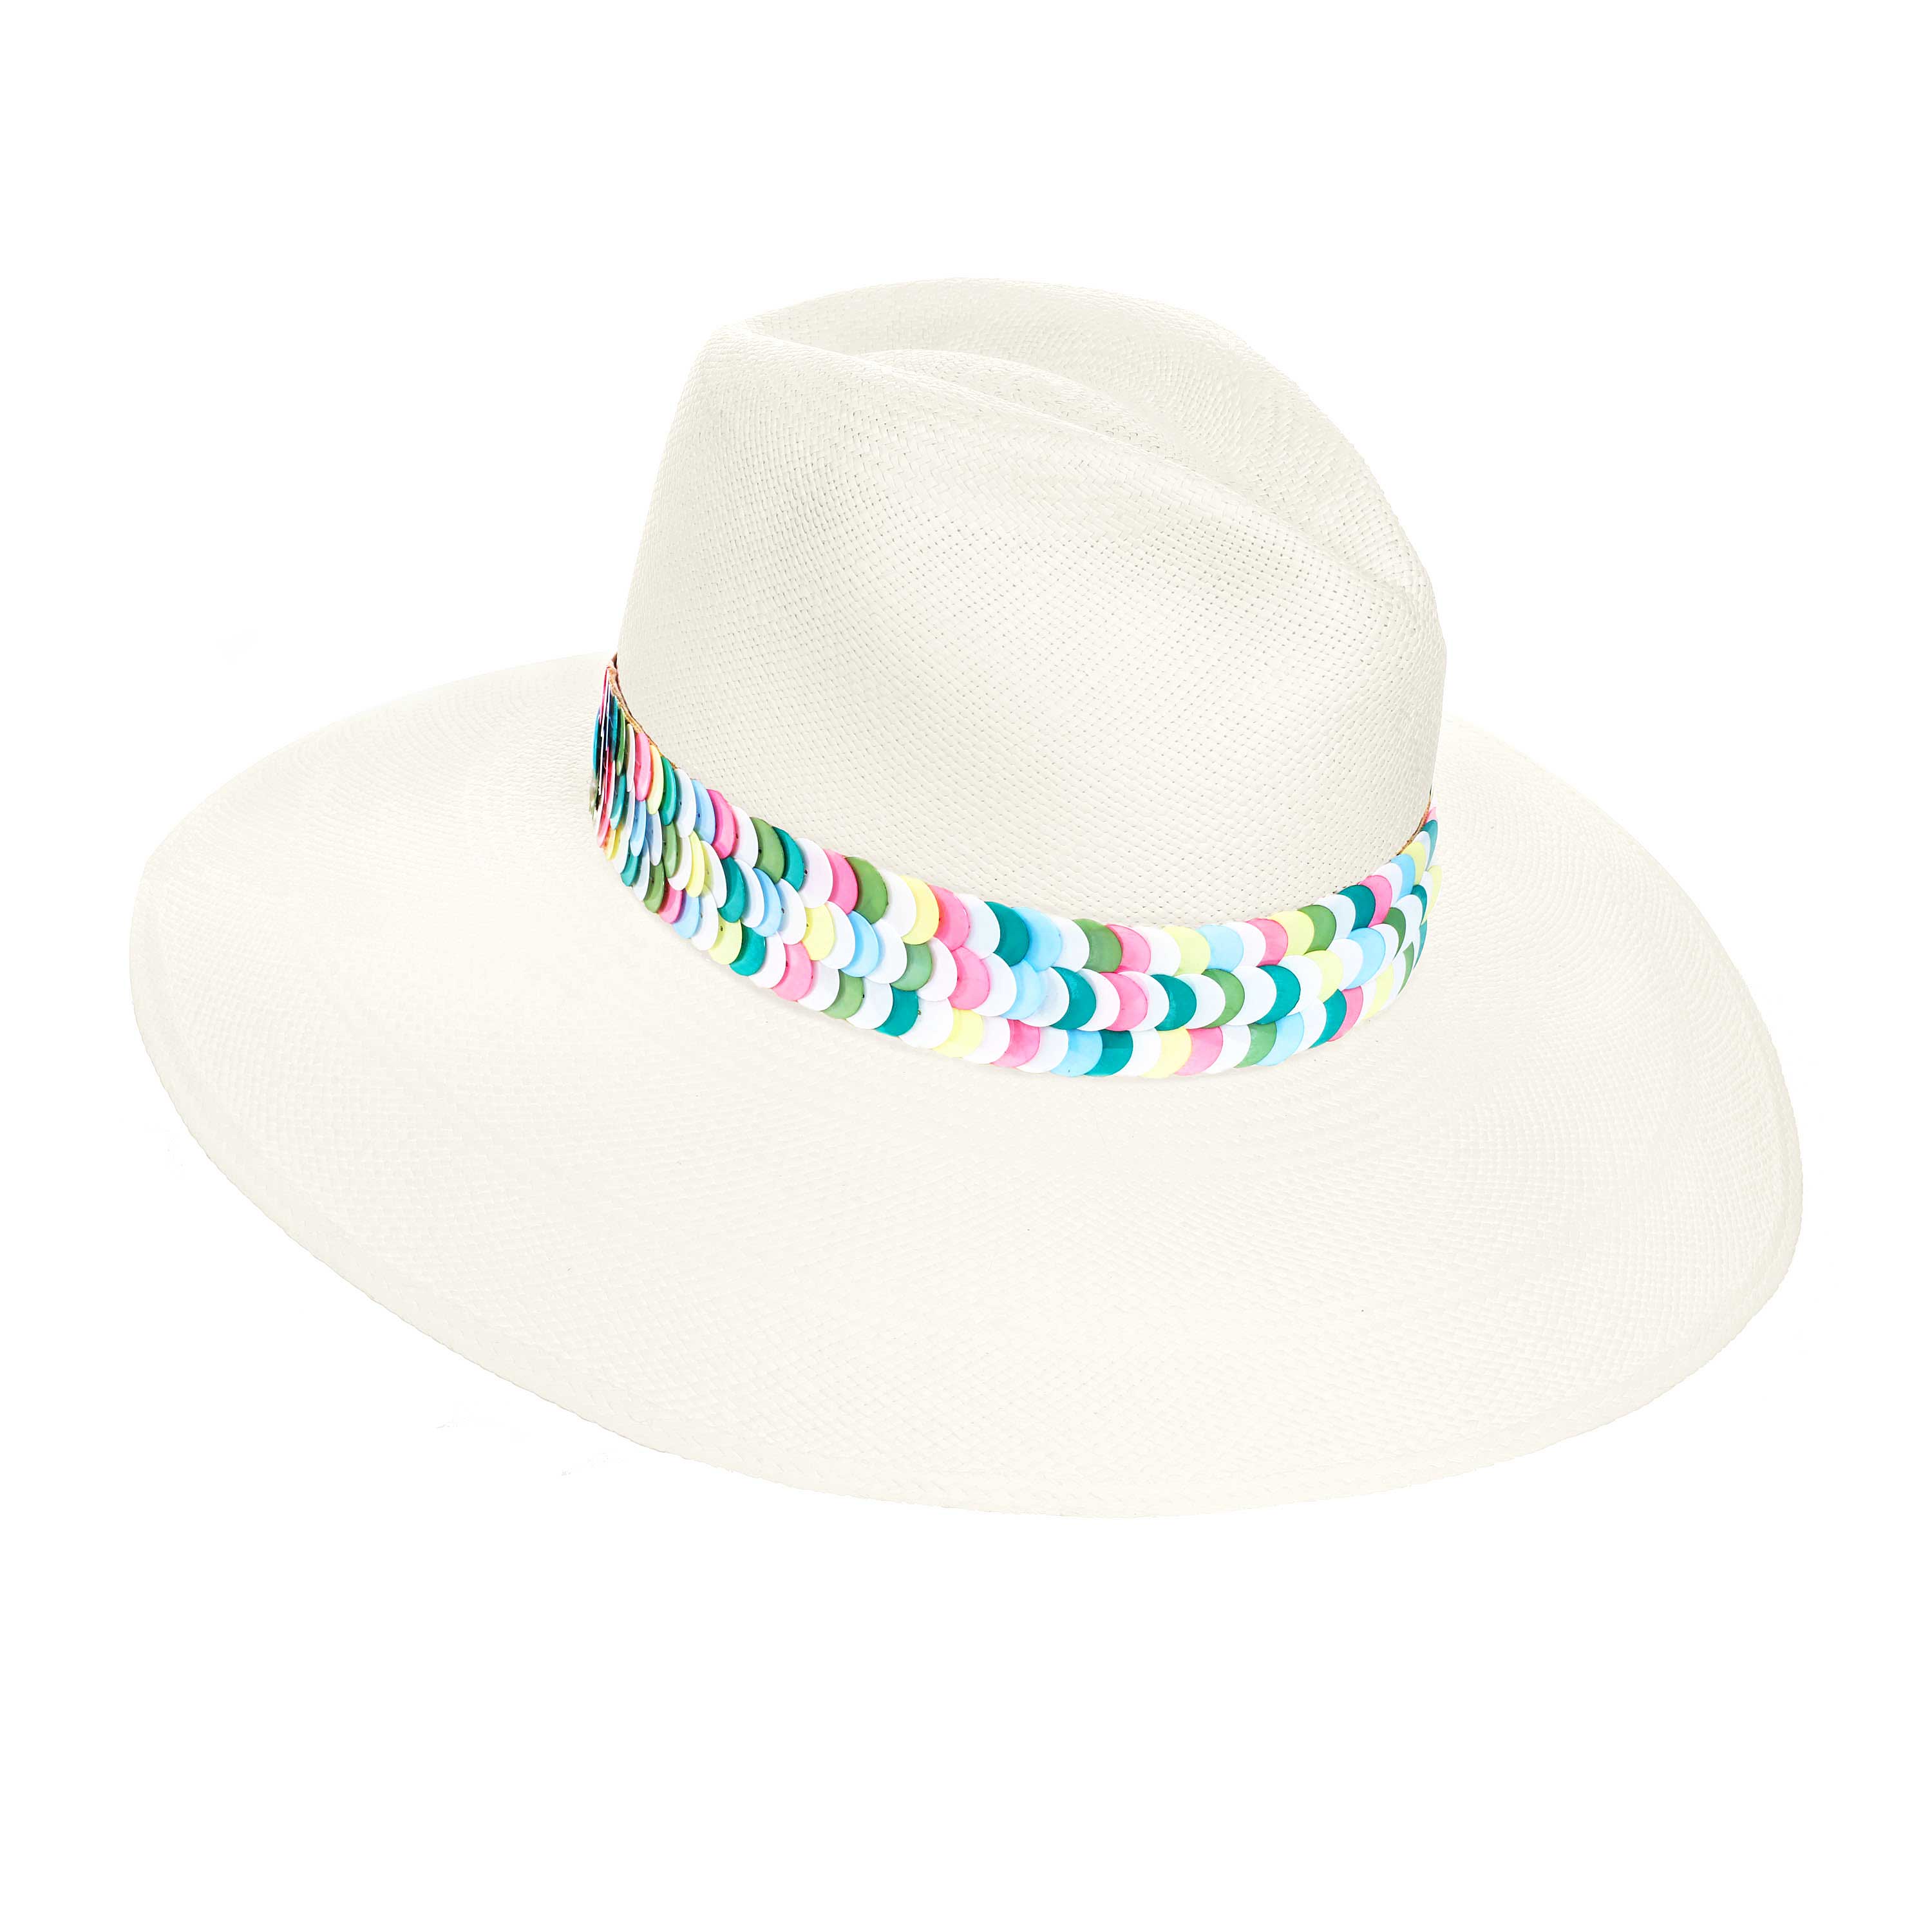 The Aleria Multicolored Panama Hat